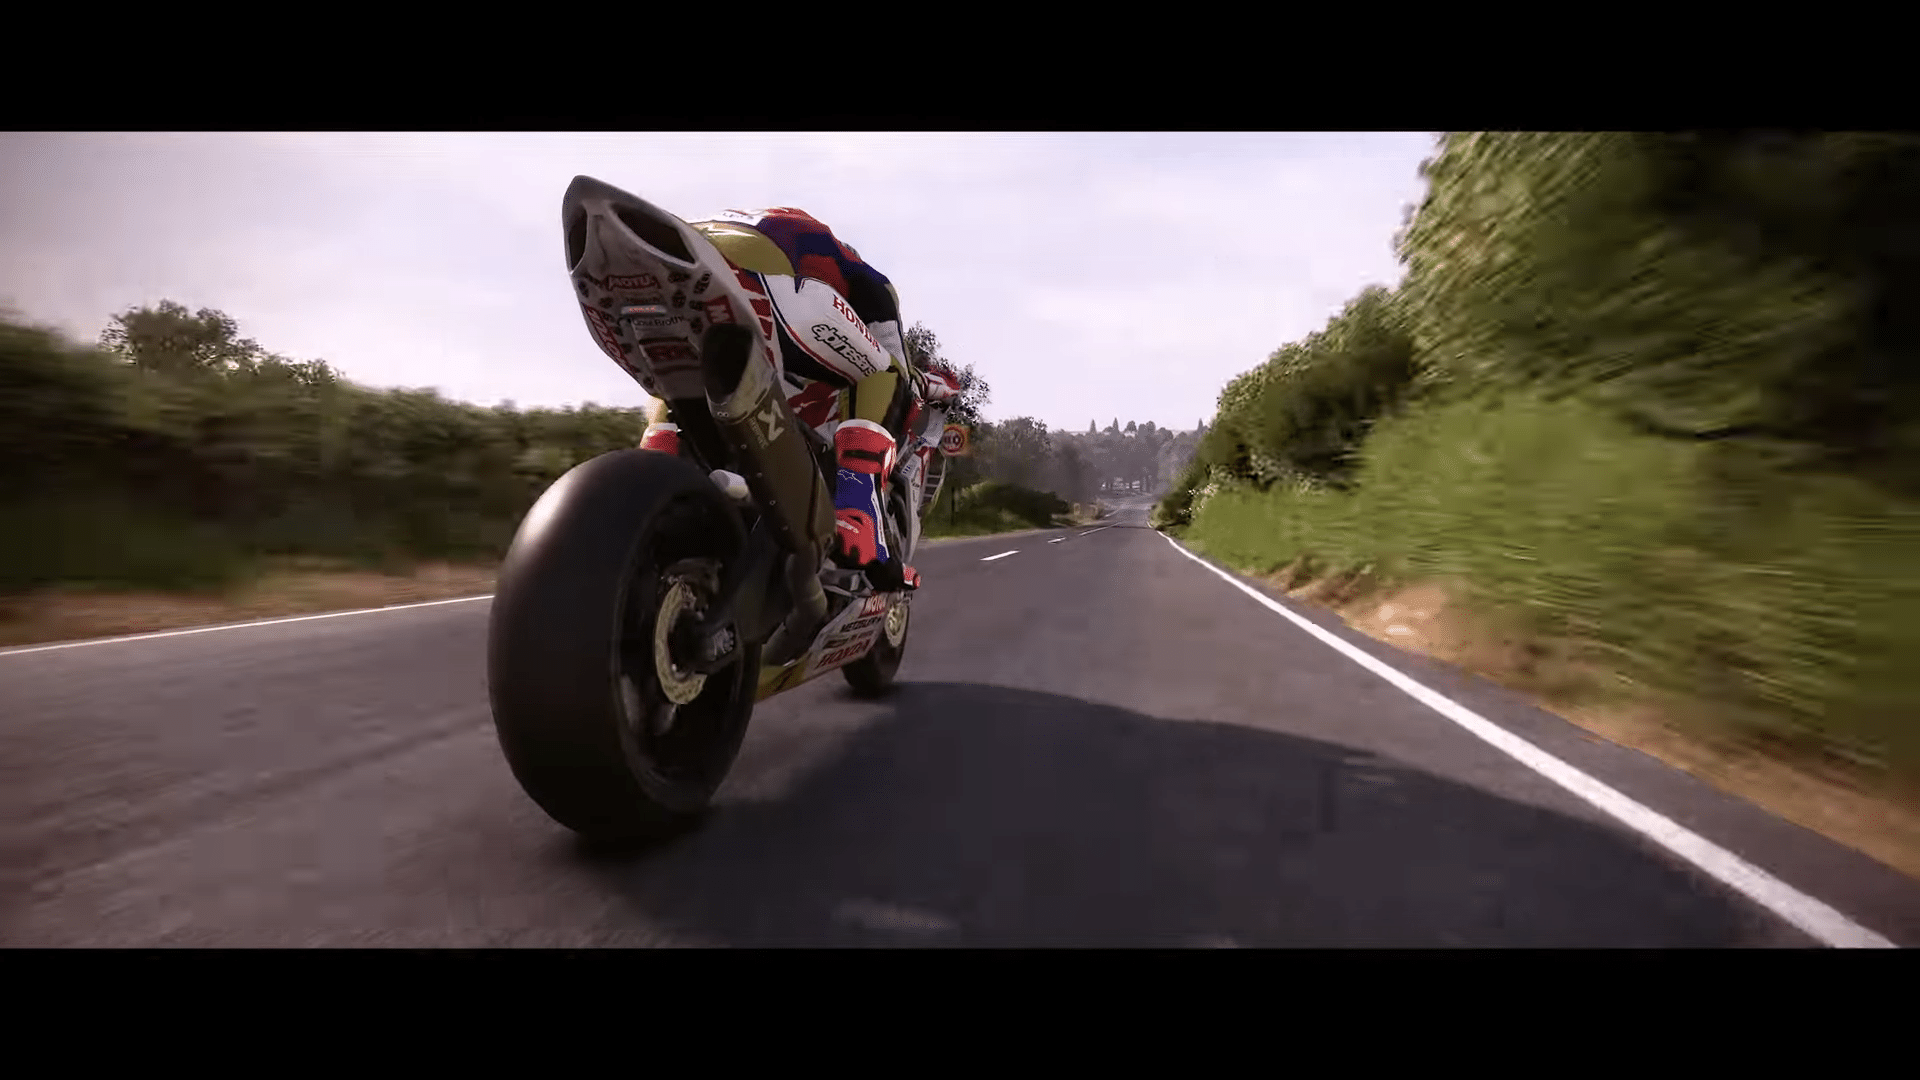 TT Isle Of Man: Ride on the Edge 3 chega para o próximo ano